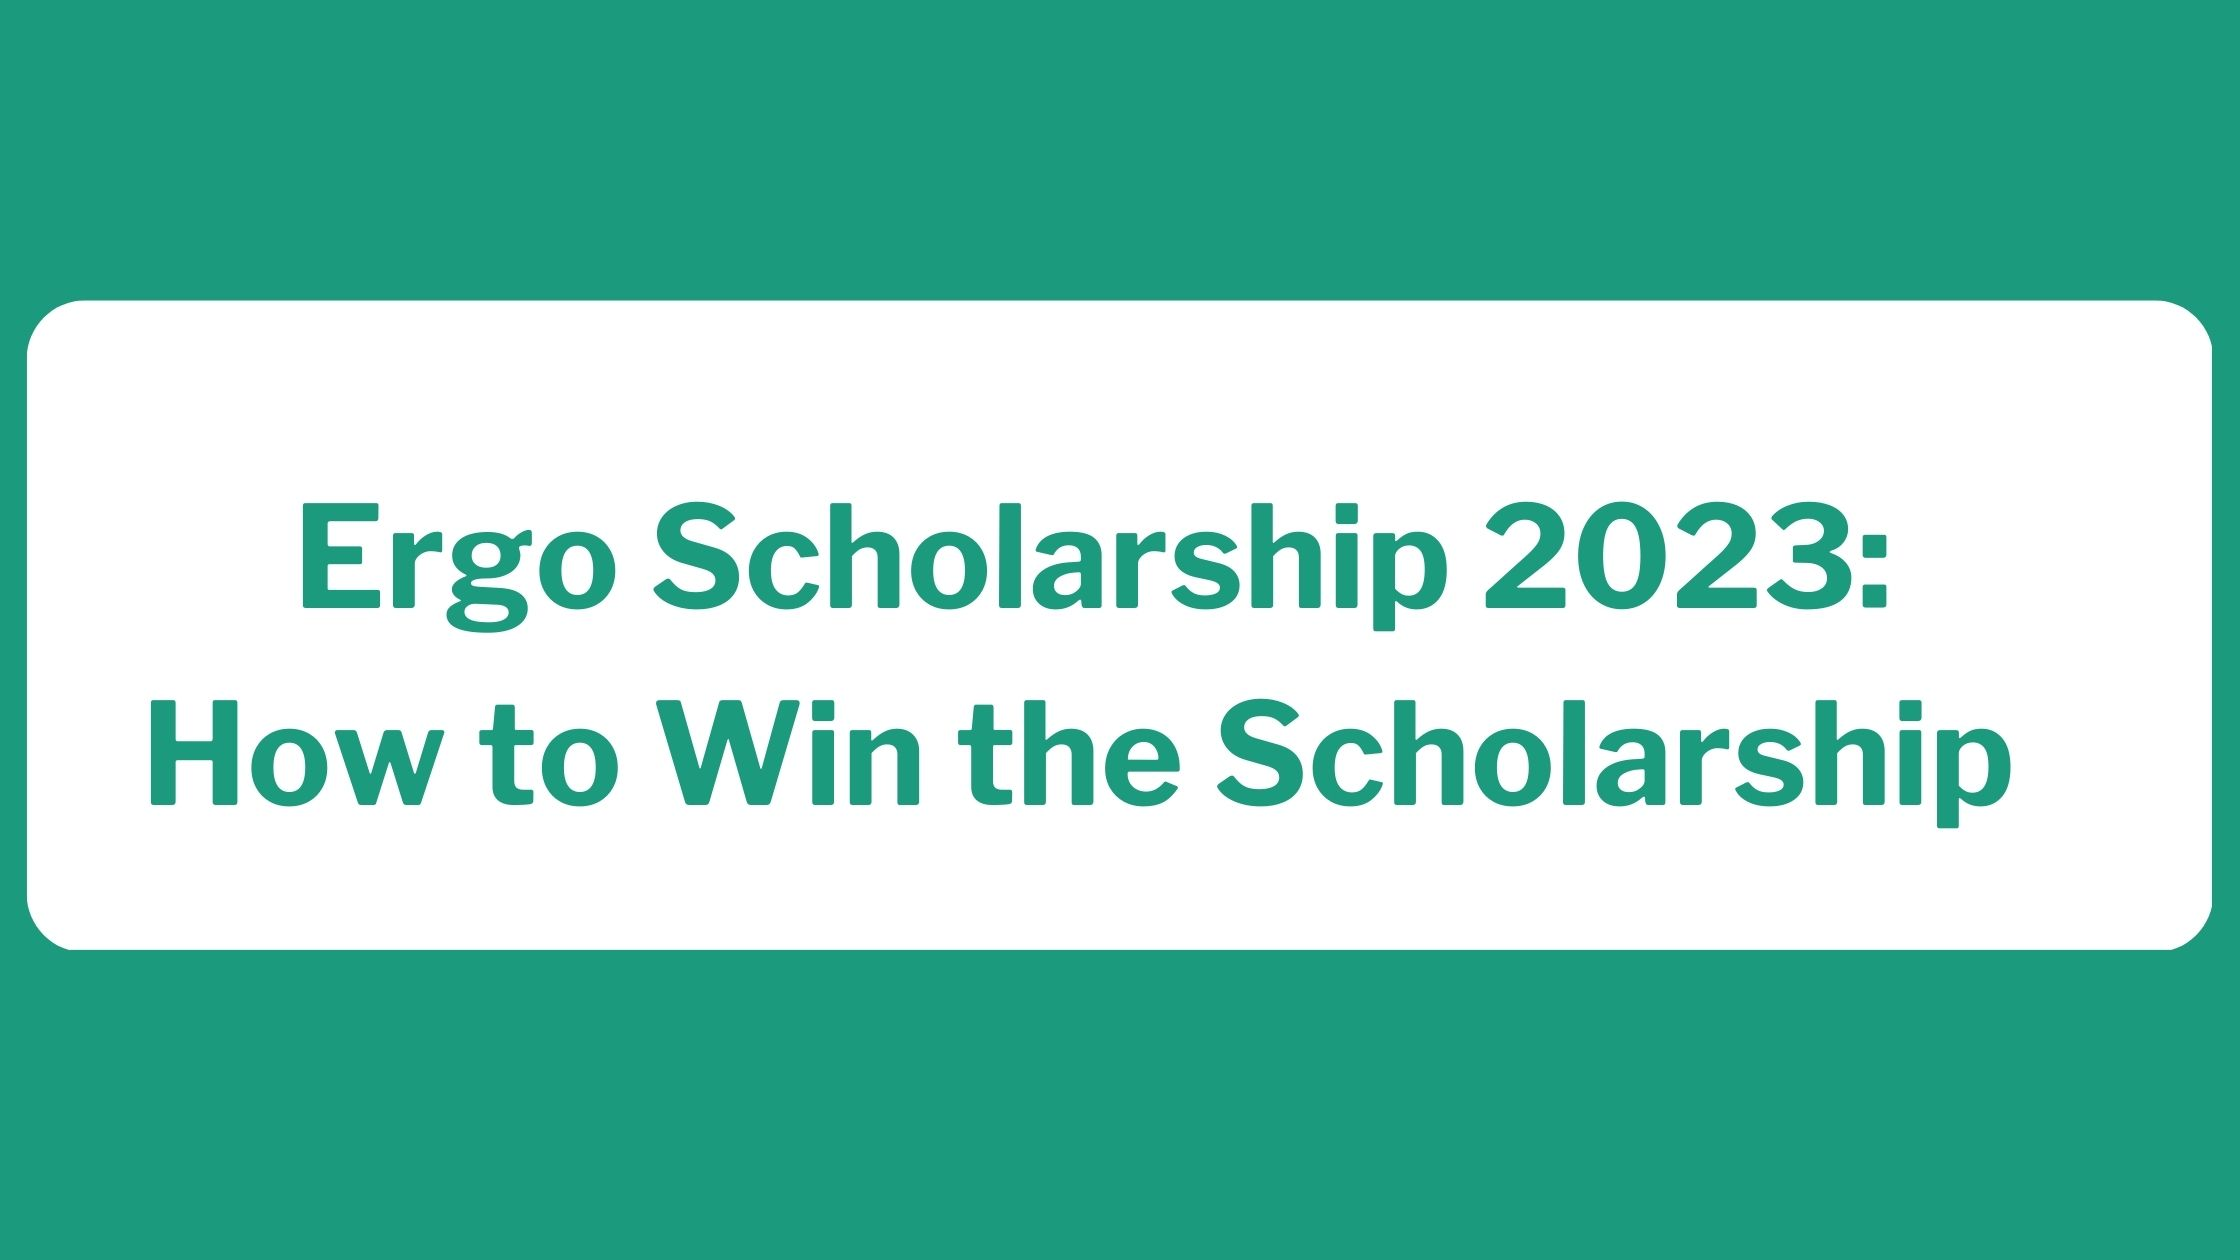 Ergo Scholarship 2023: How to Win the Scholarship